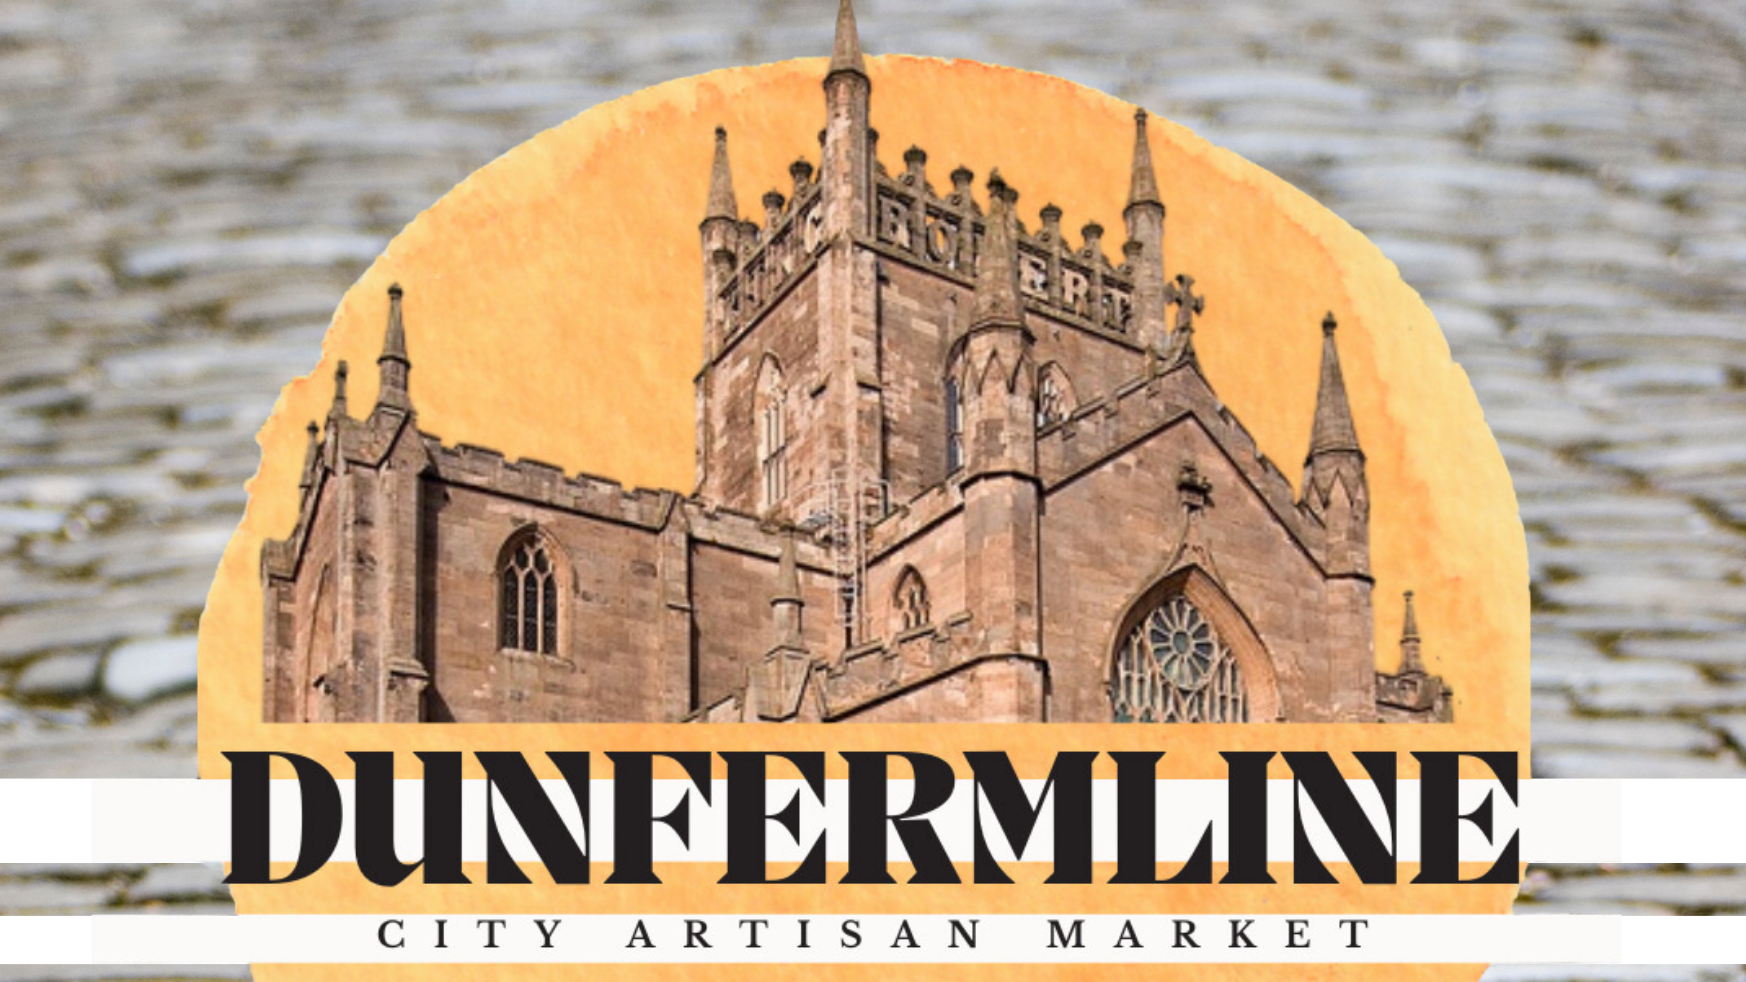 Dunfermline City Artisan Market - July